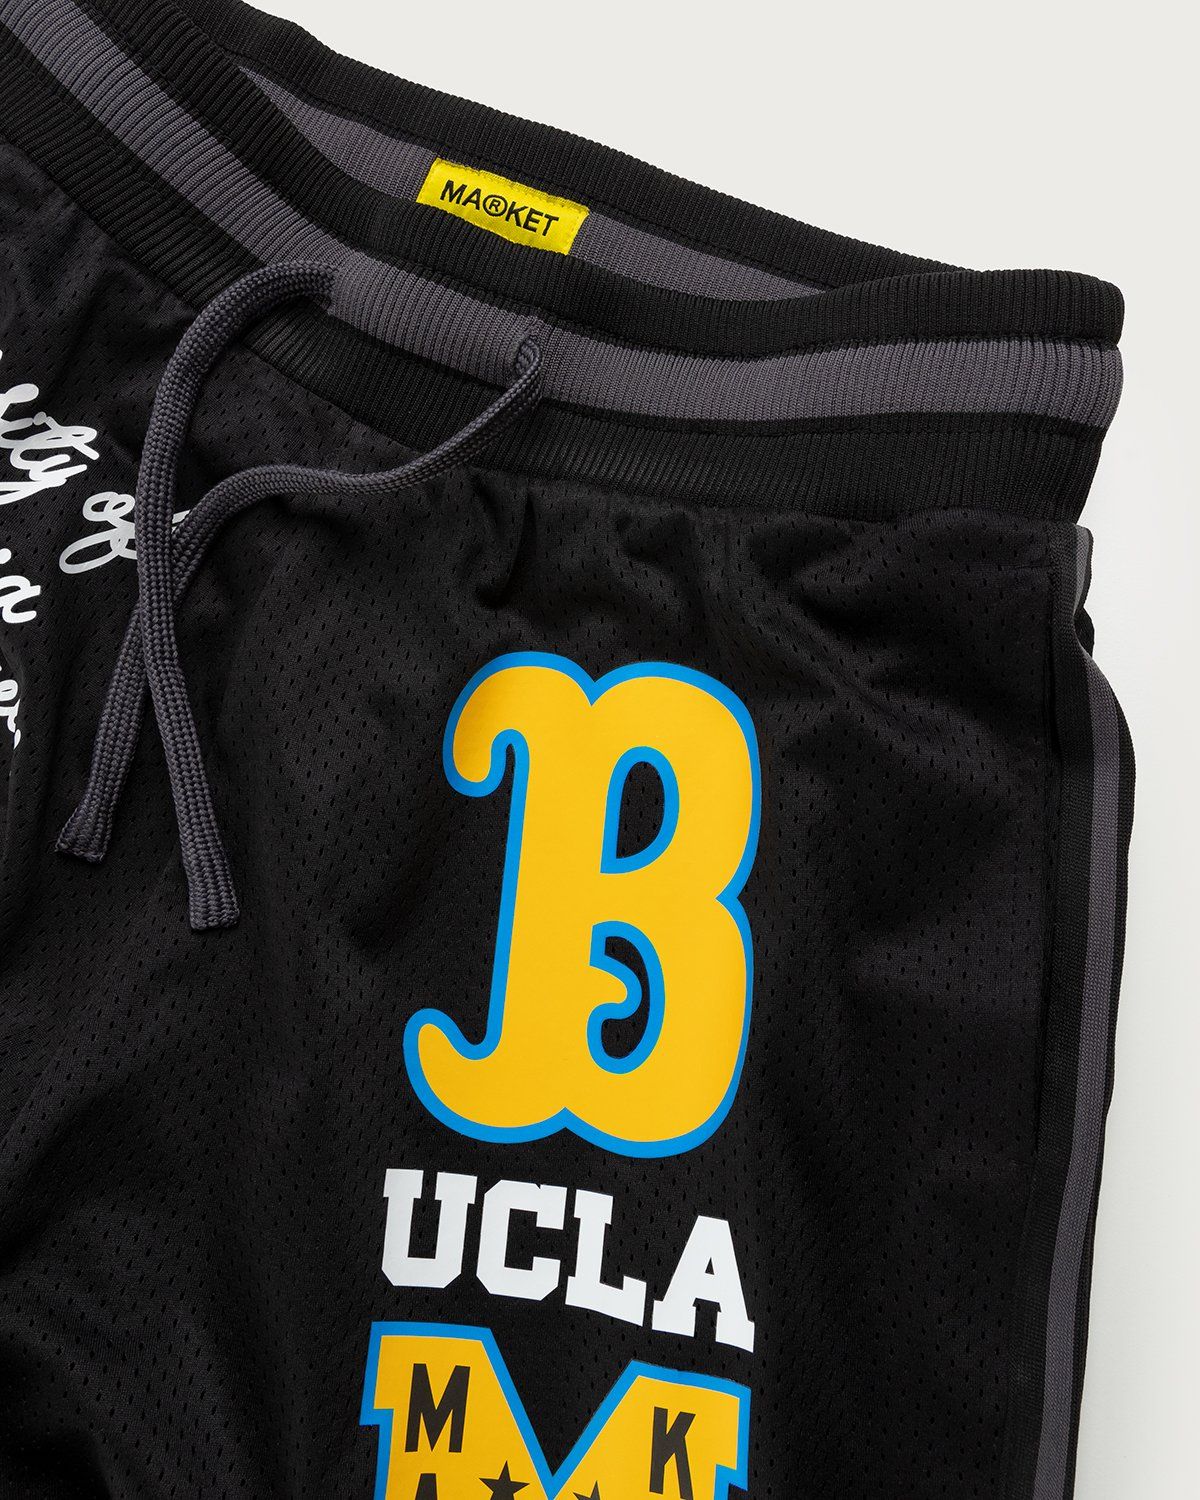 Market x UCLA x Highsnobiety – HS Sports Mesh Bruin Shorts Black - Shorts - Black - Image 3